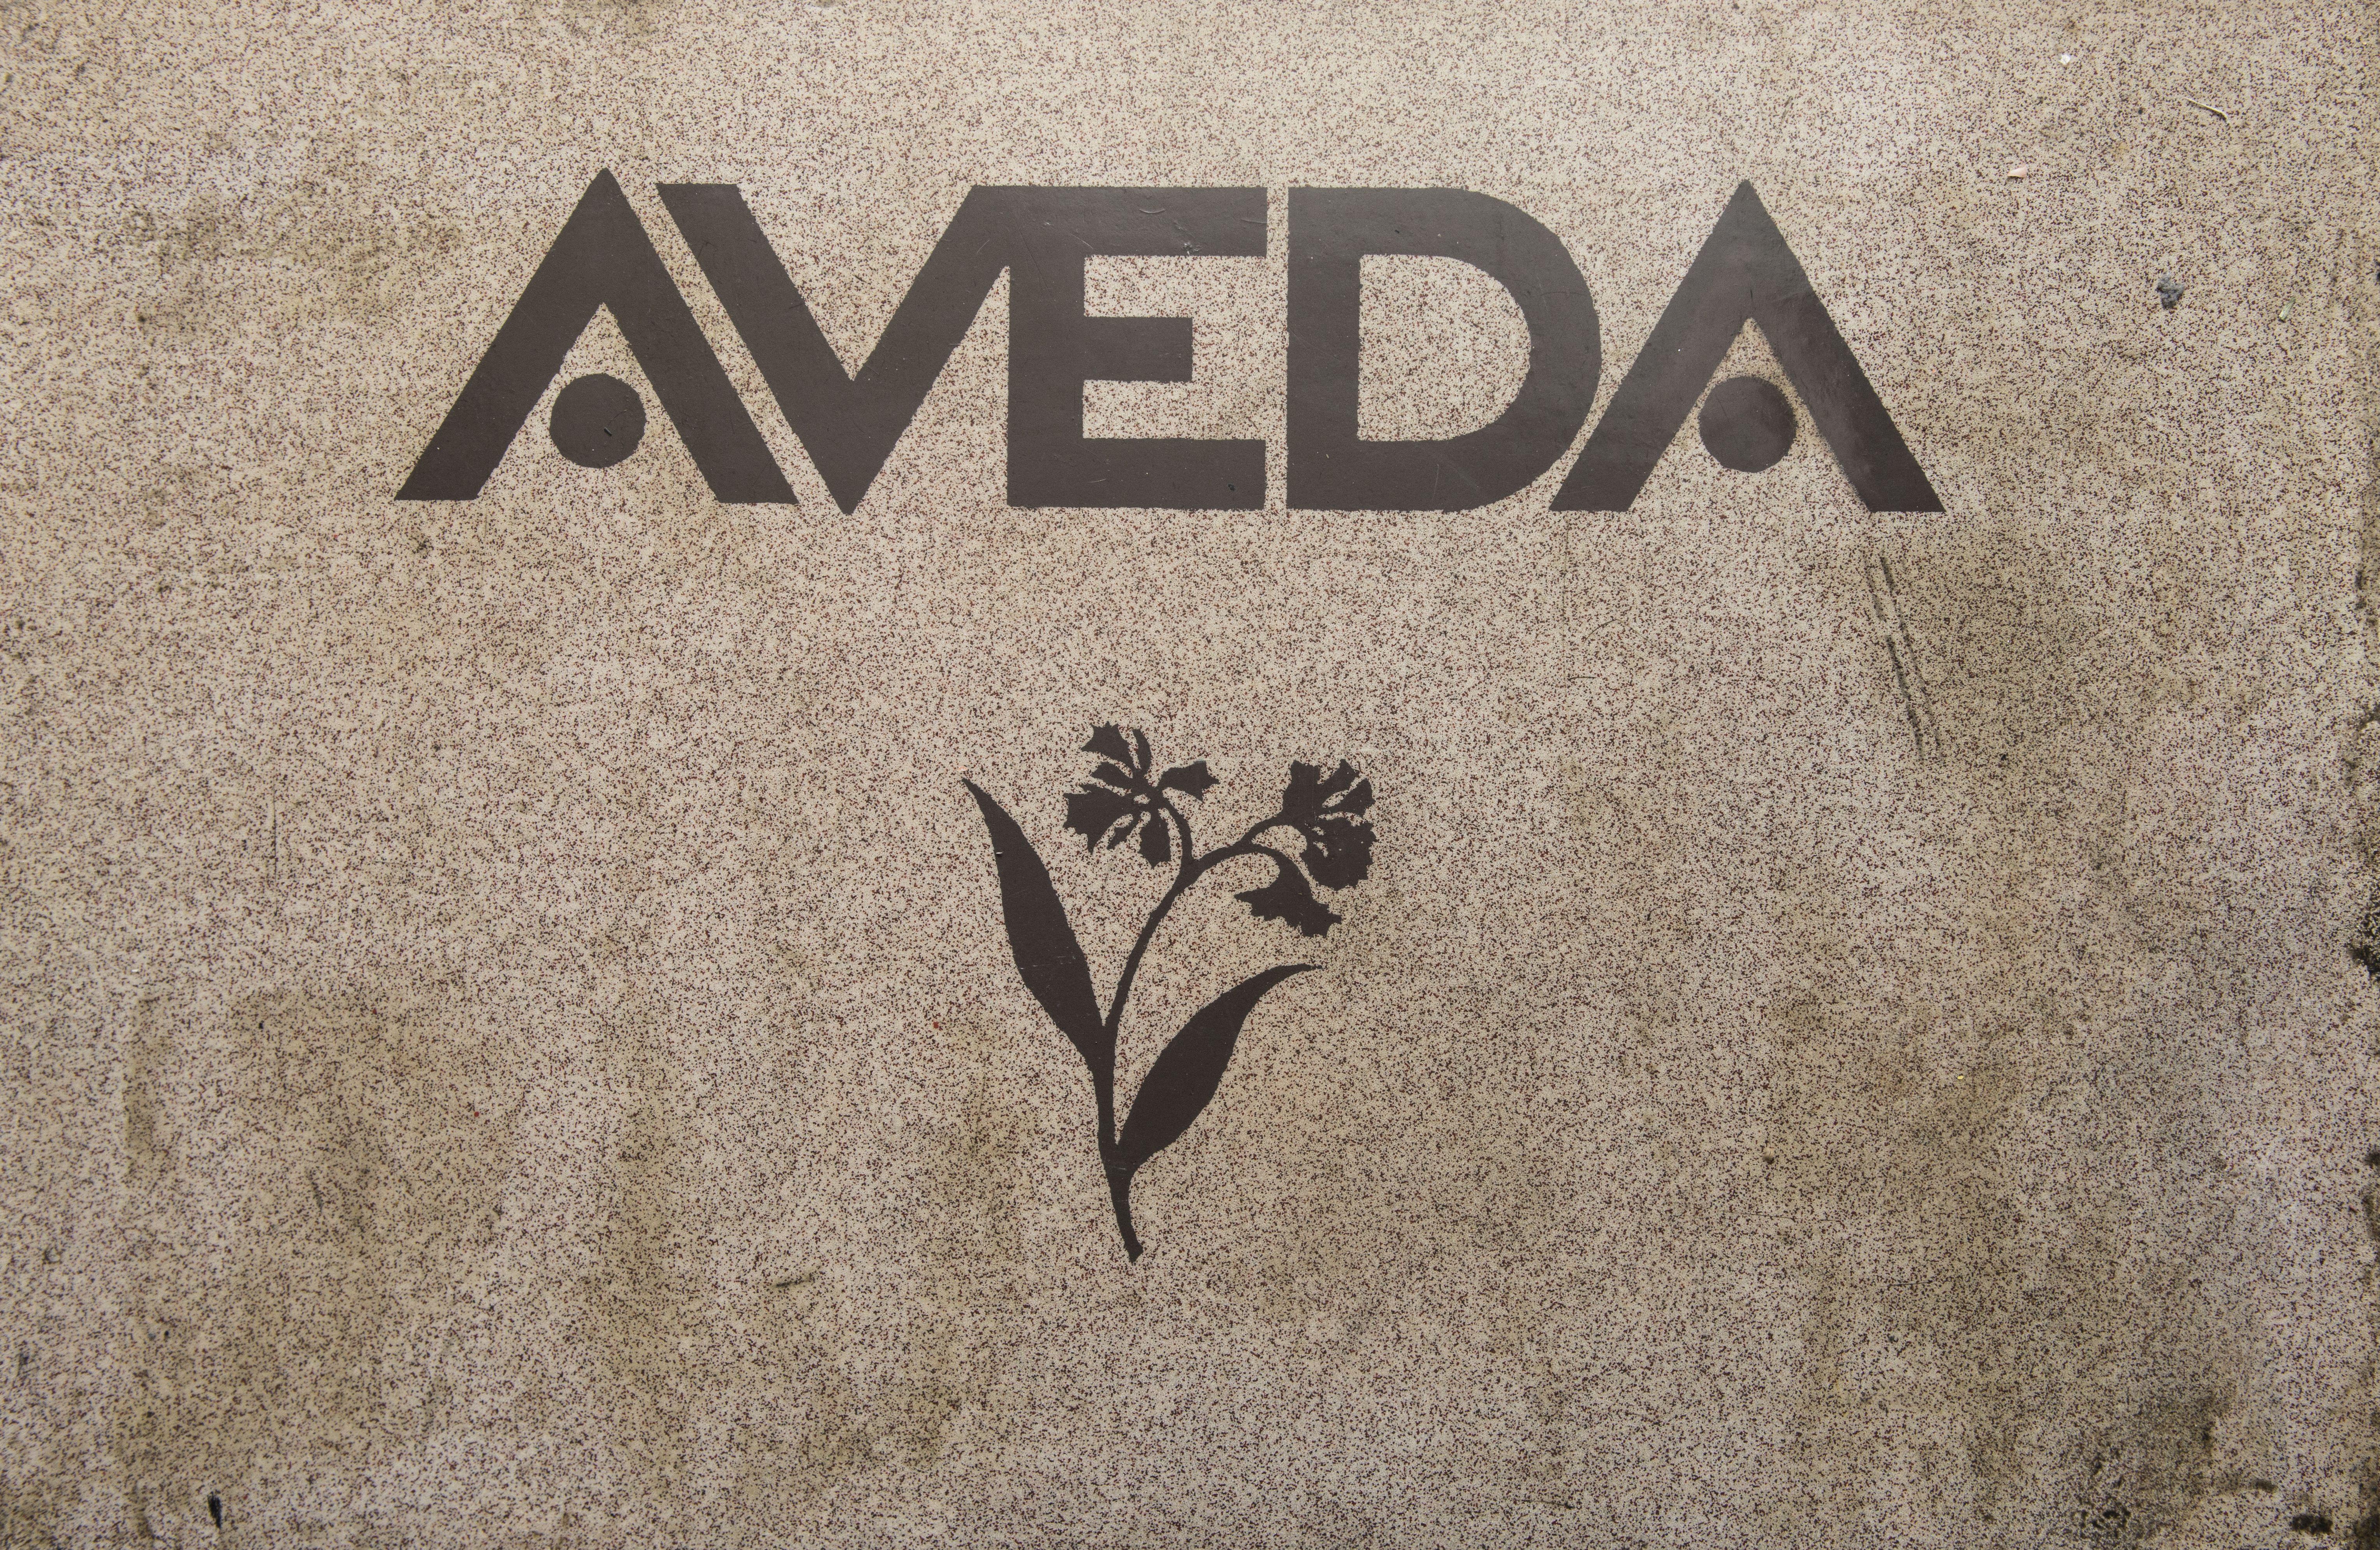 Aveda Logo - The Advantage of an Aveda Education - Aveda Institute | Aveda ...